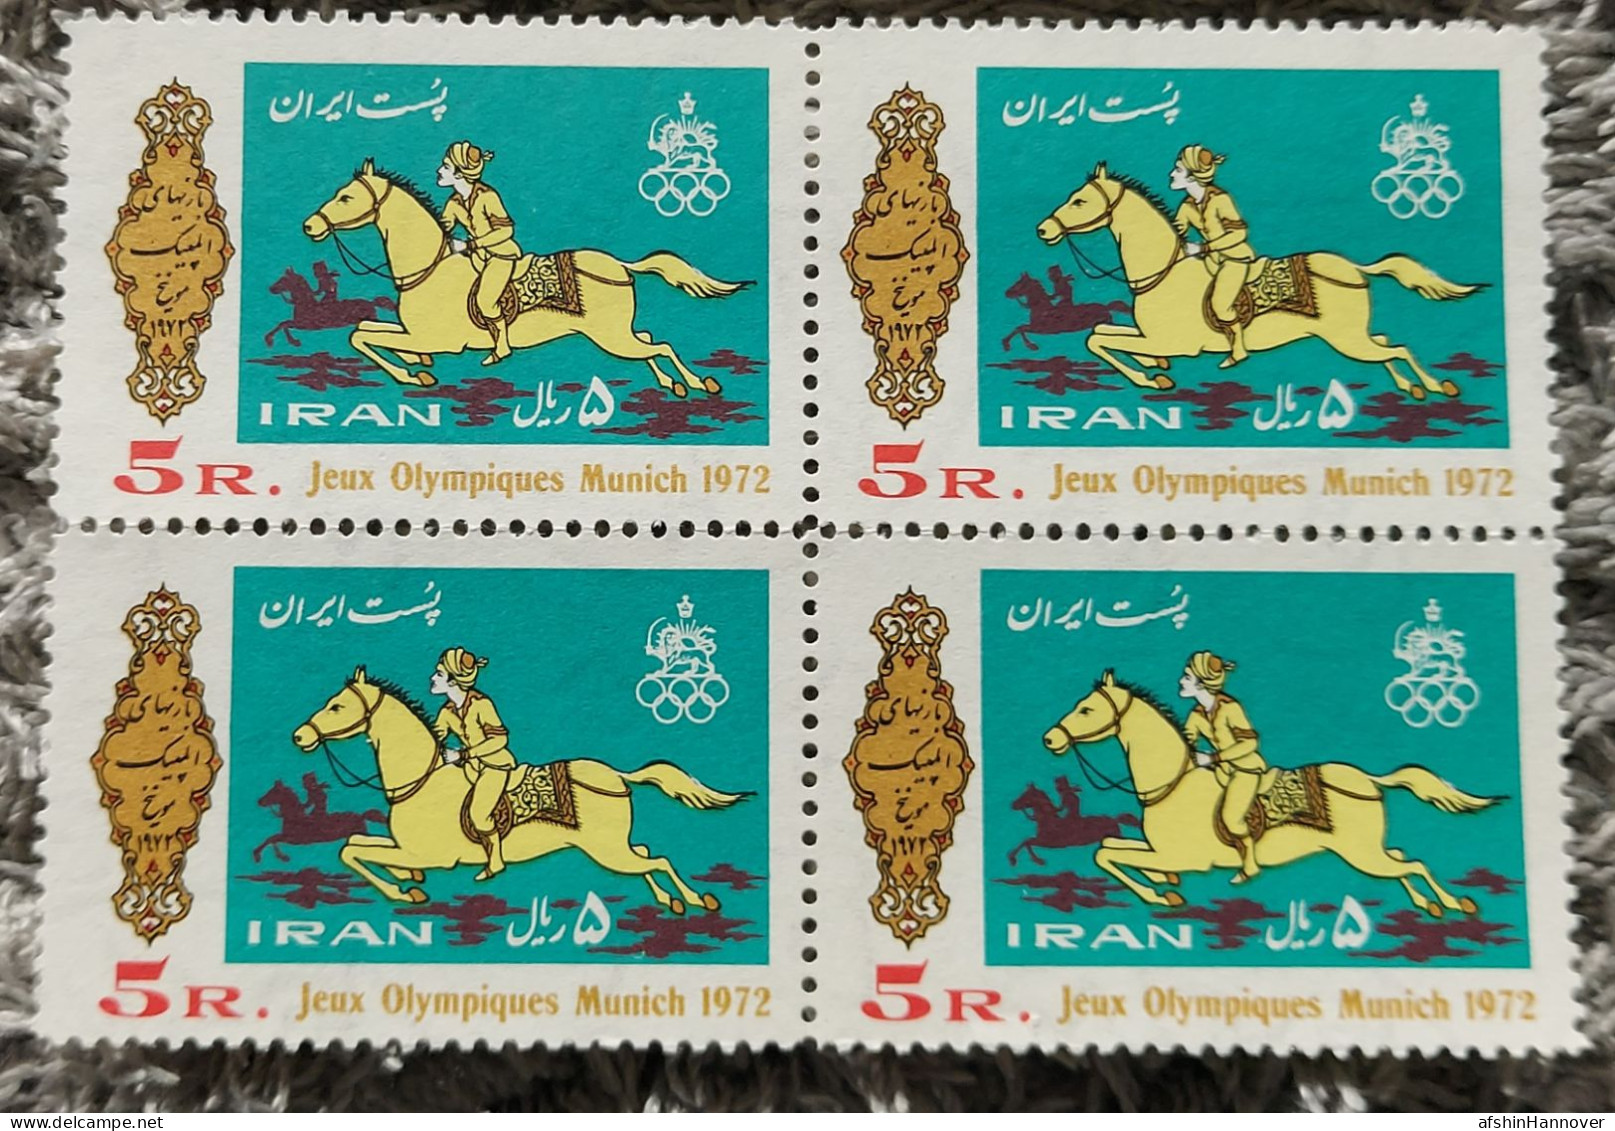 Iran Shah Pahlavi Shah    1972 Olympic Games - Munich, Germany سری تمبر بازیهای المپیک مونیخ سال 1351 - Iran